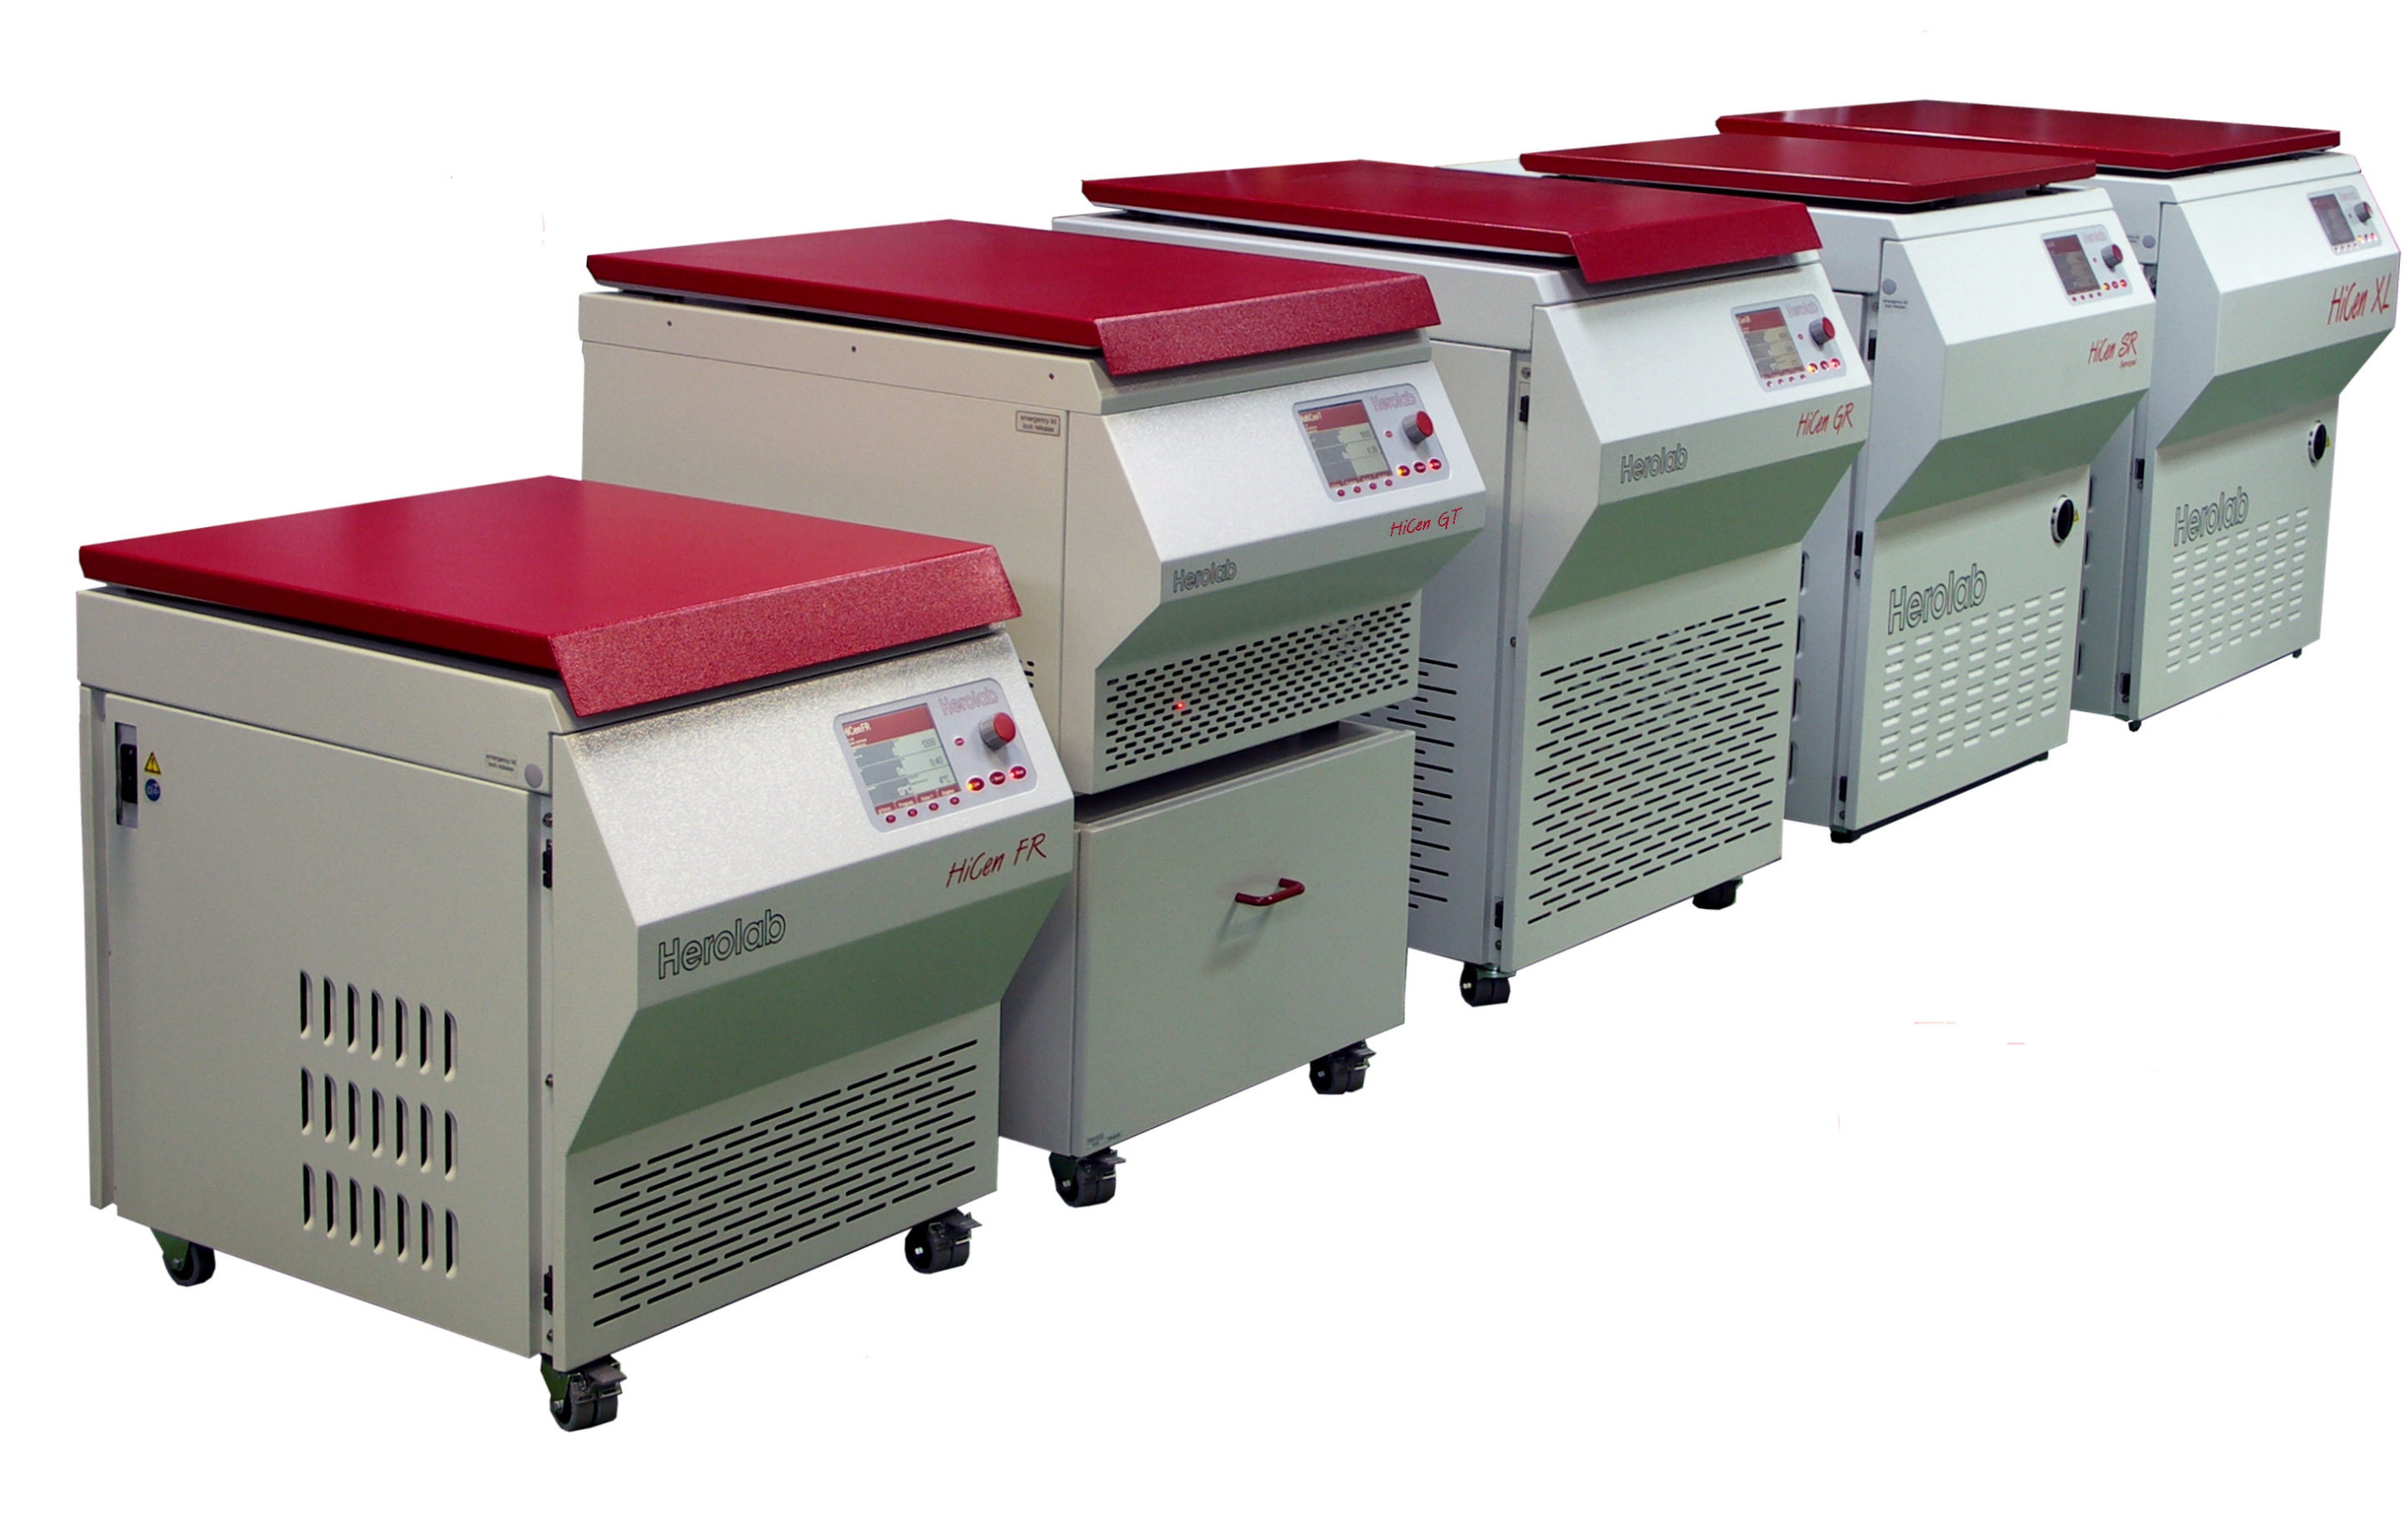 The Herolab HiCen centrifuge range